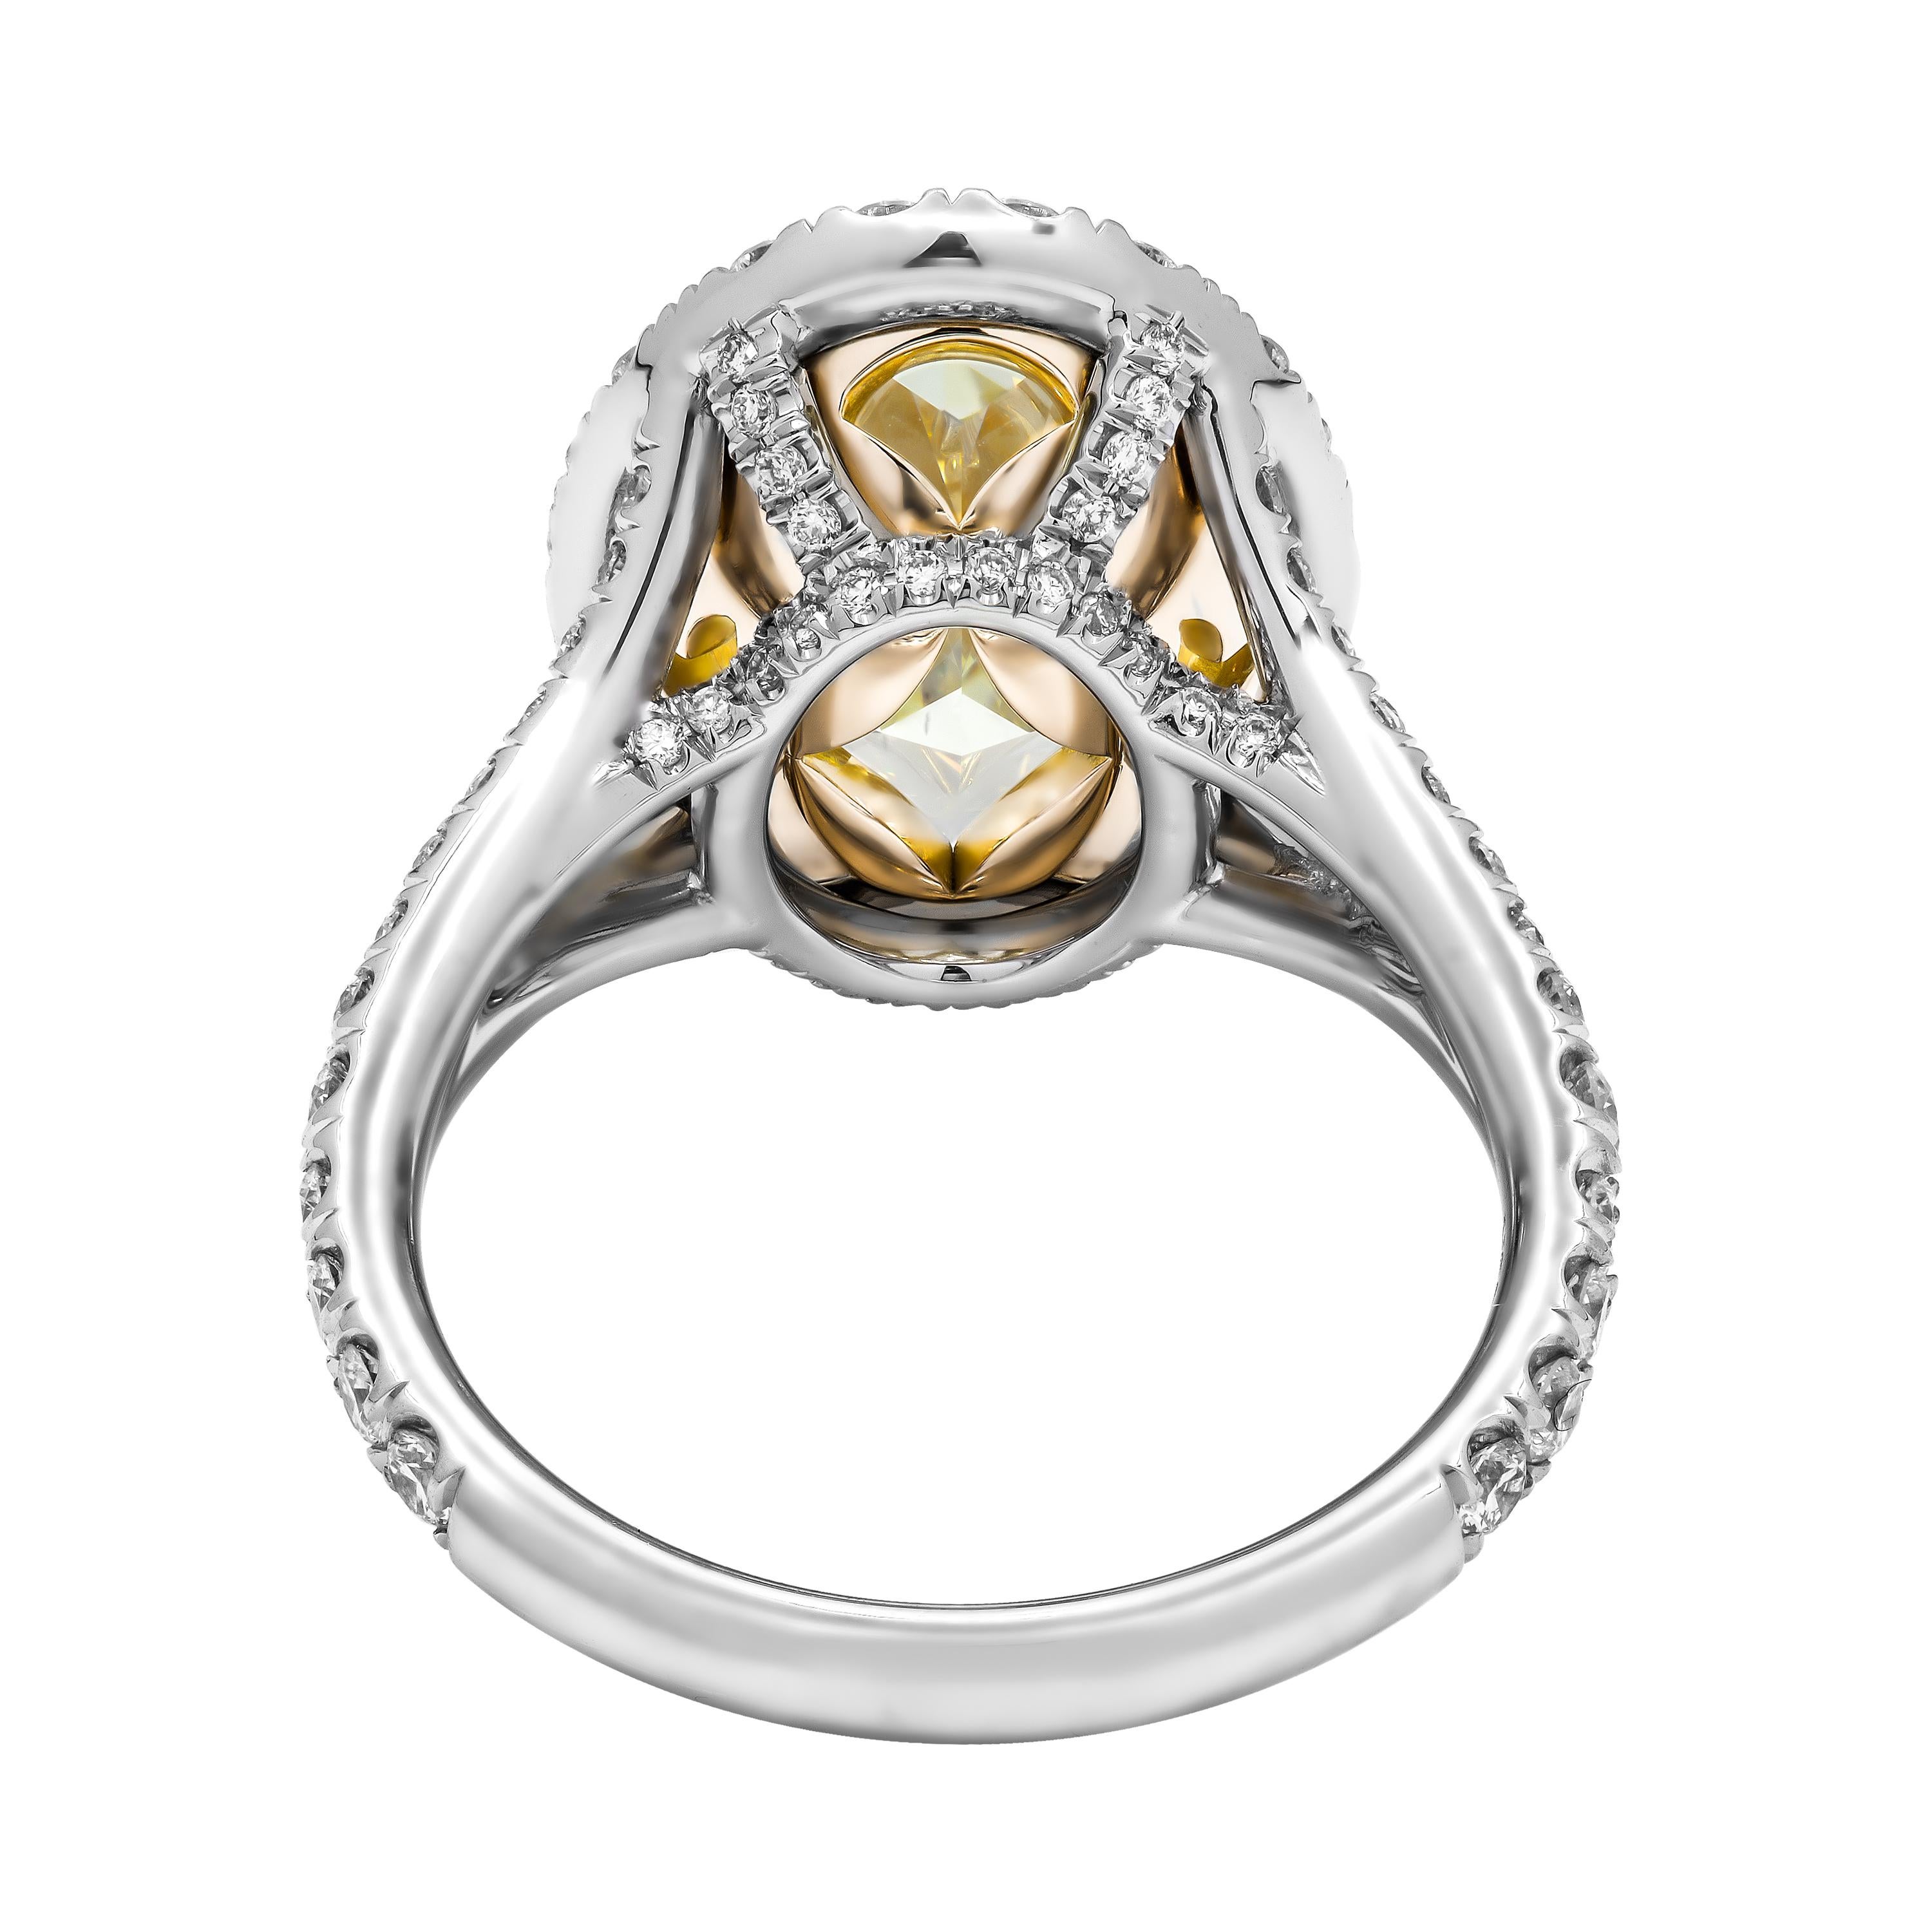 Oval Cut GIA Certified 6.54 Carat Oval Fancy Yellow Diamond Ring